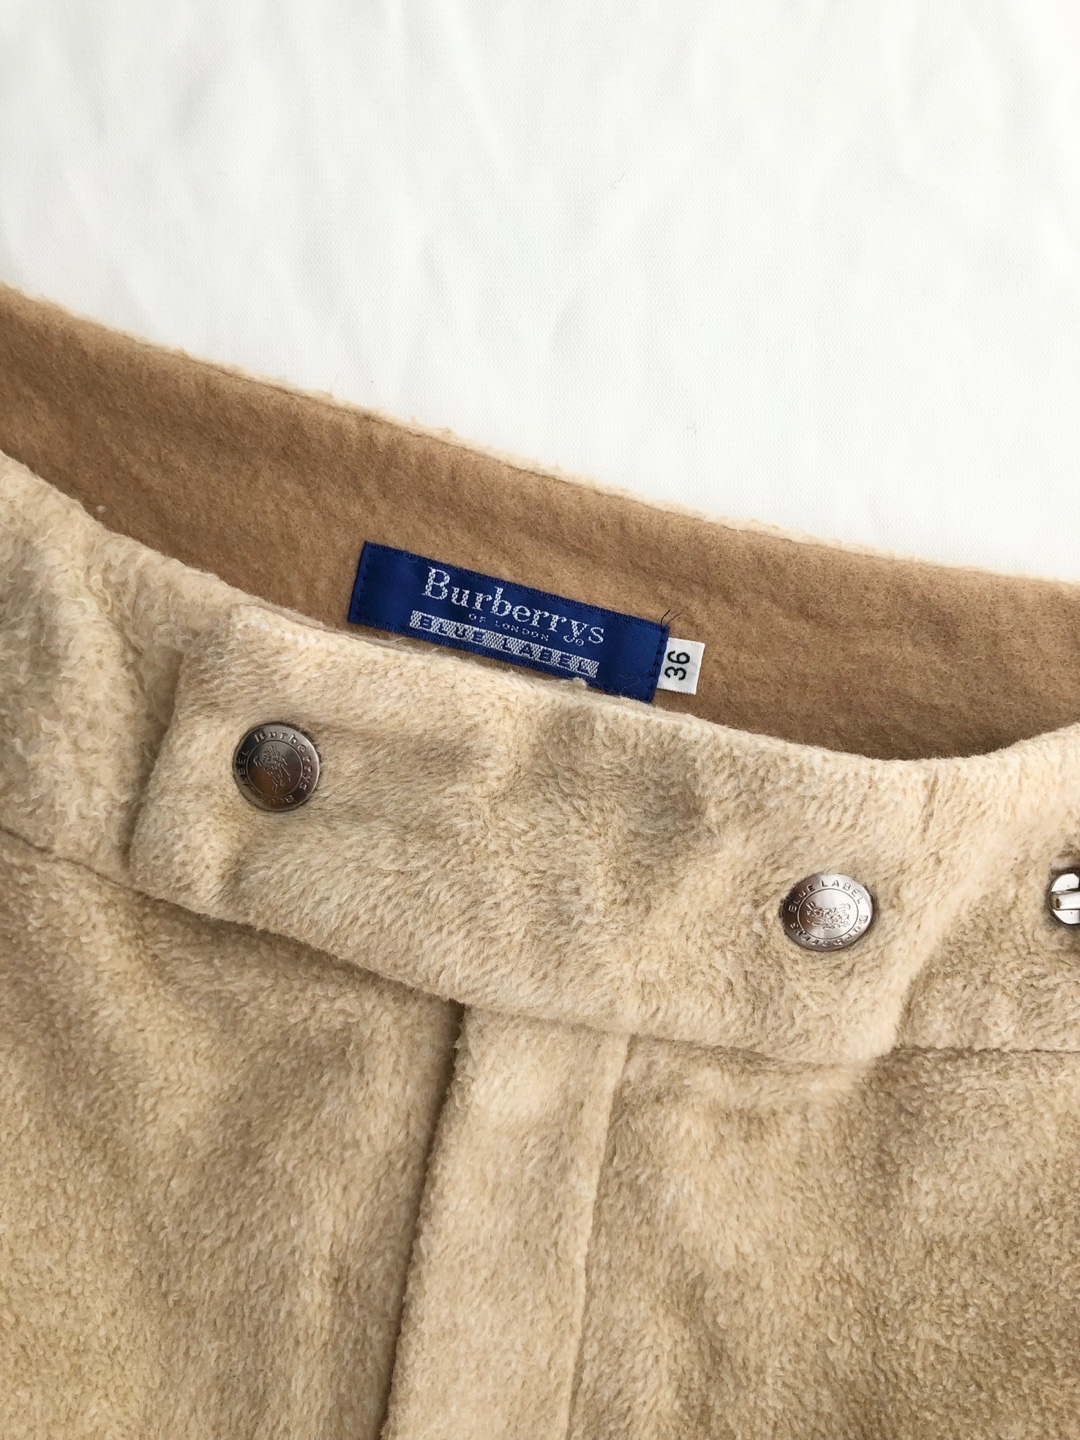 Burberry Beige Brown Side Zipper Skirt [27-28 inch]